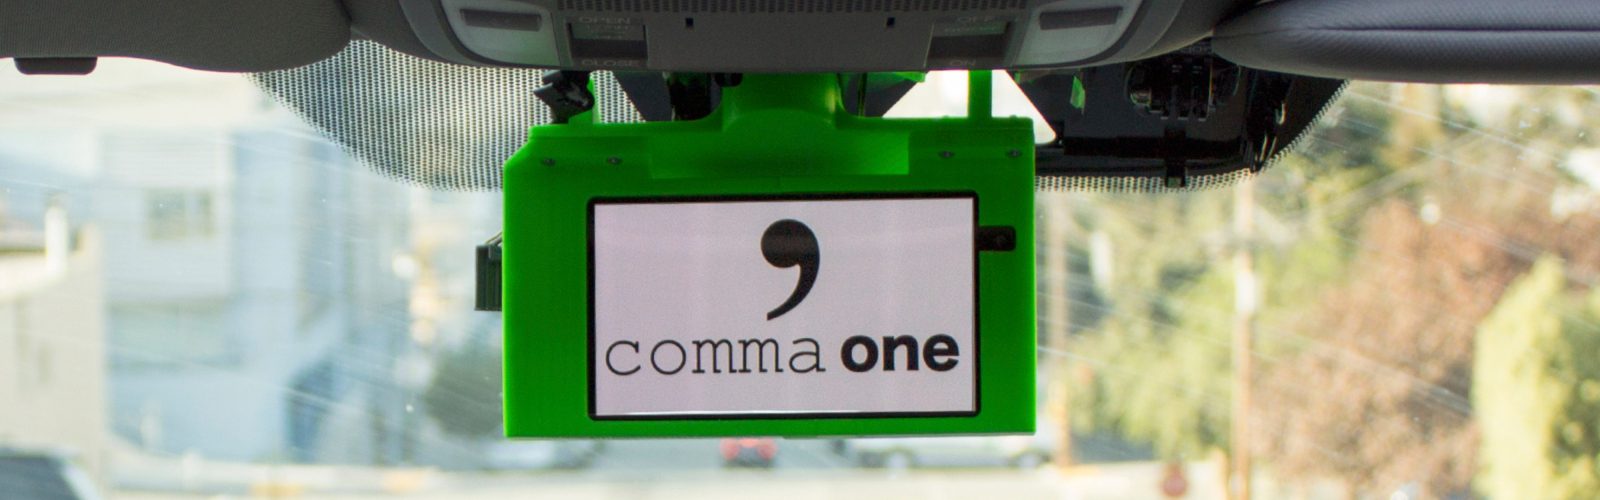 Comma One kit voiture semi autonome